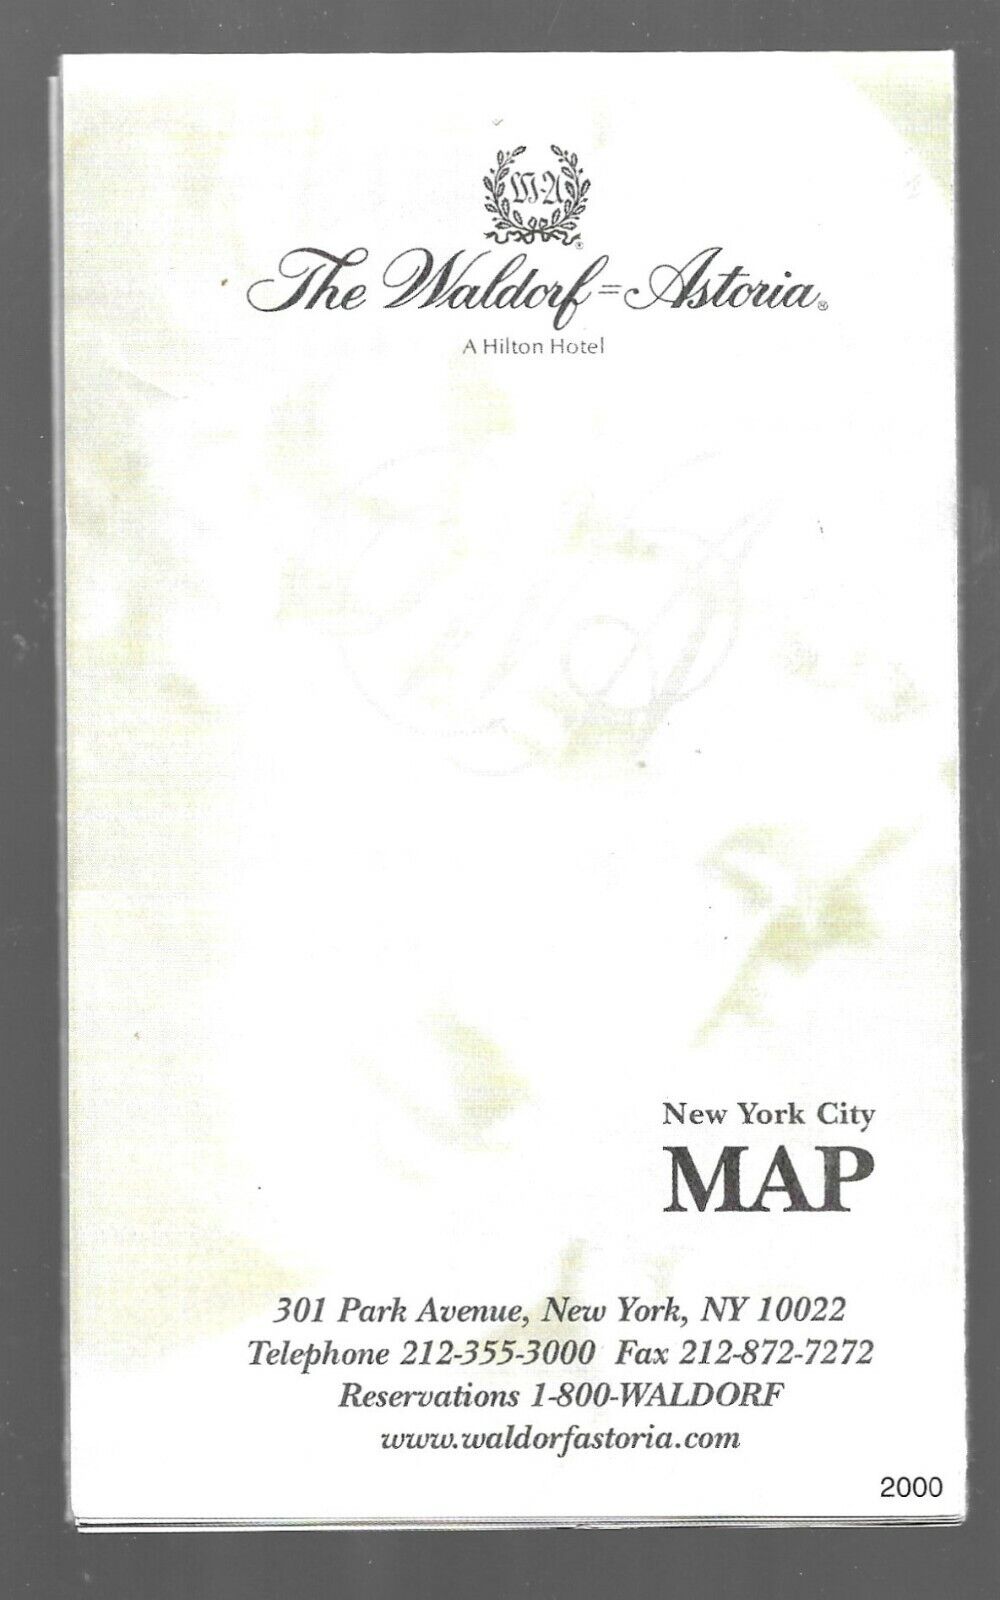 WALDORF ASTORIA NEW YORK CITY MAP 2000  & 2 POST CARDS 